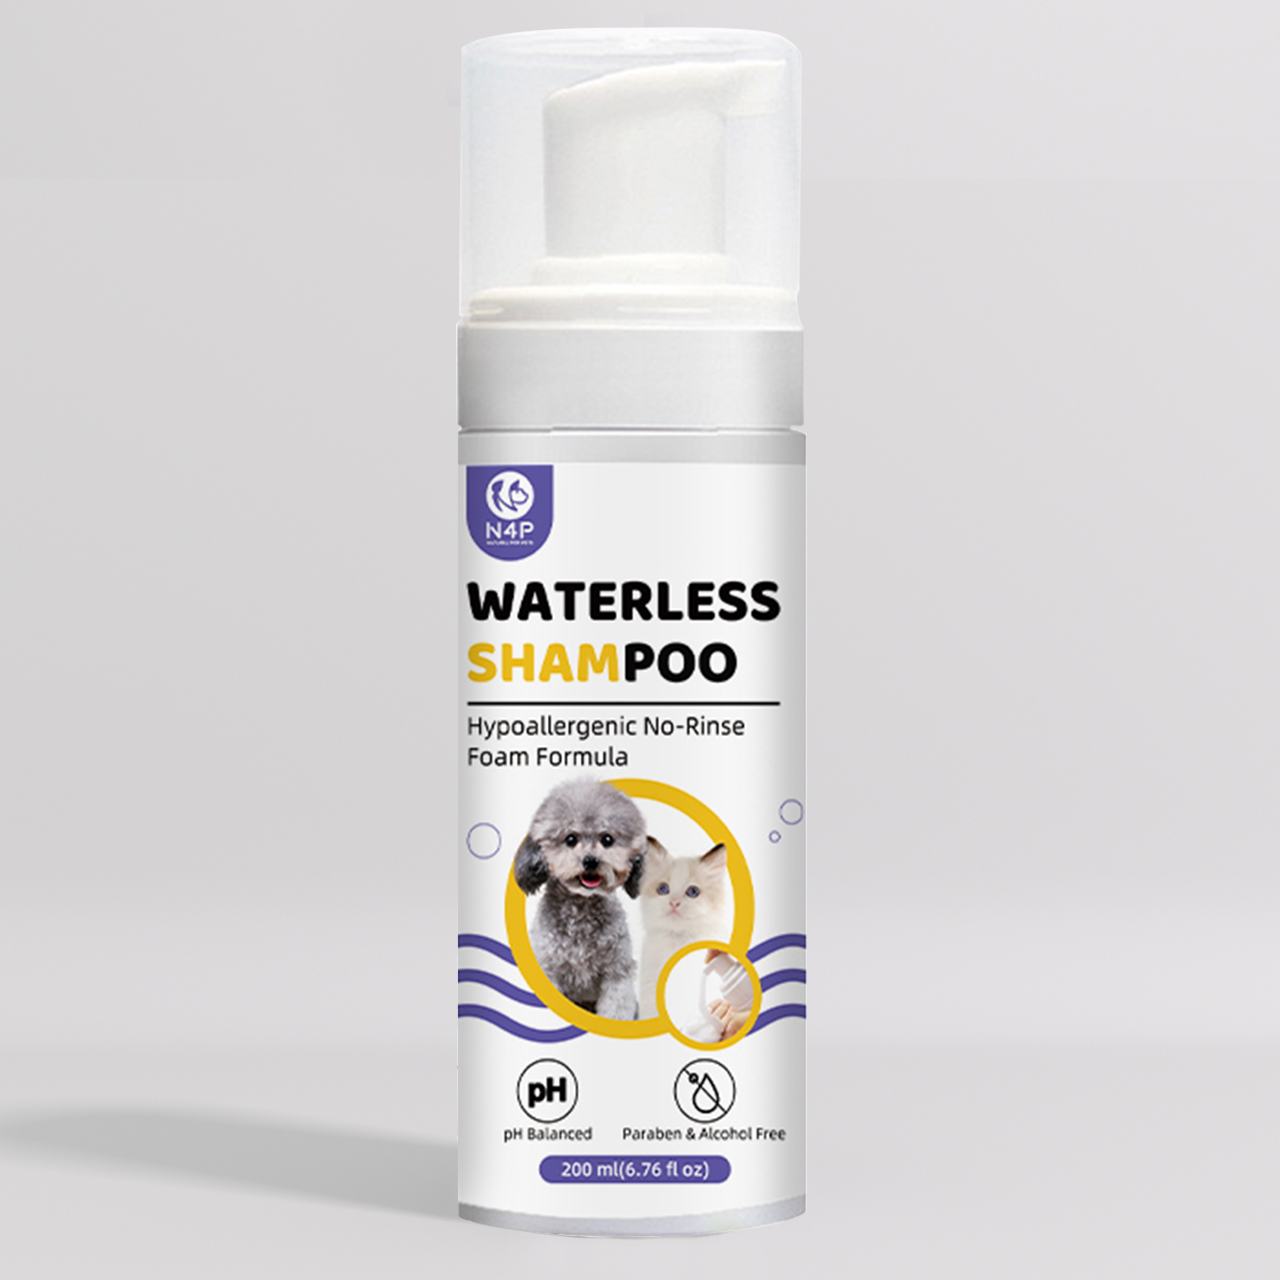 N4P Waterless Shampoo